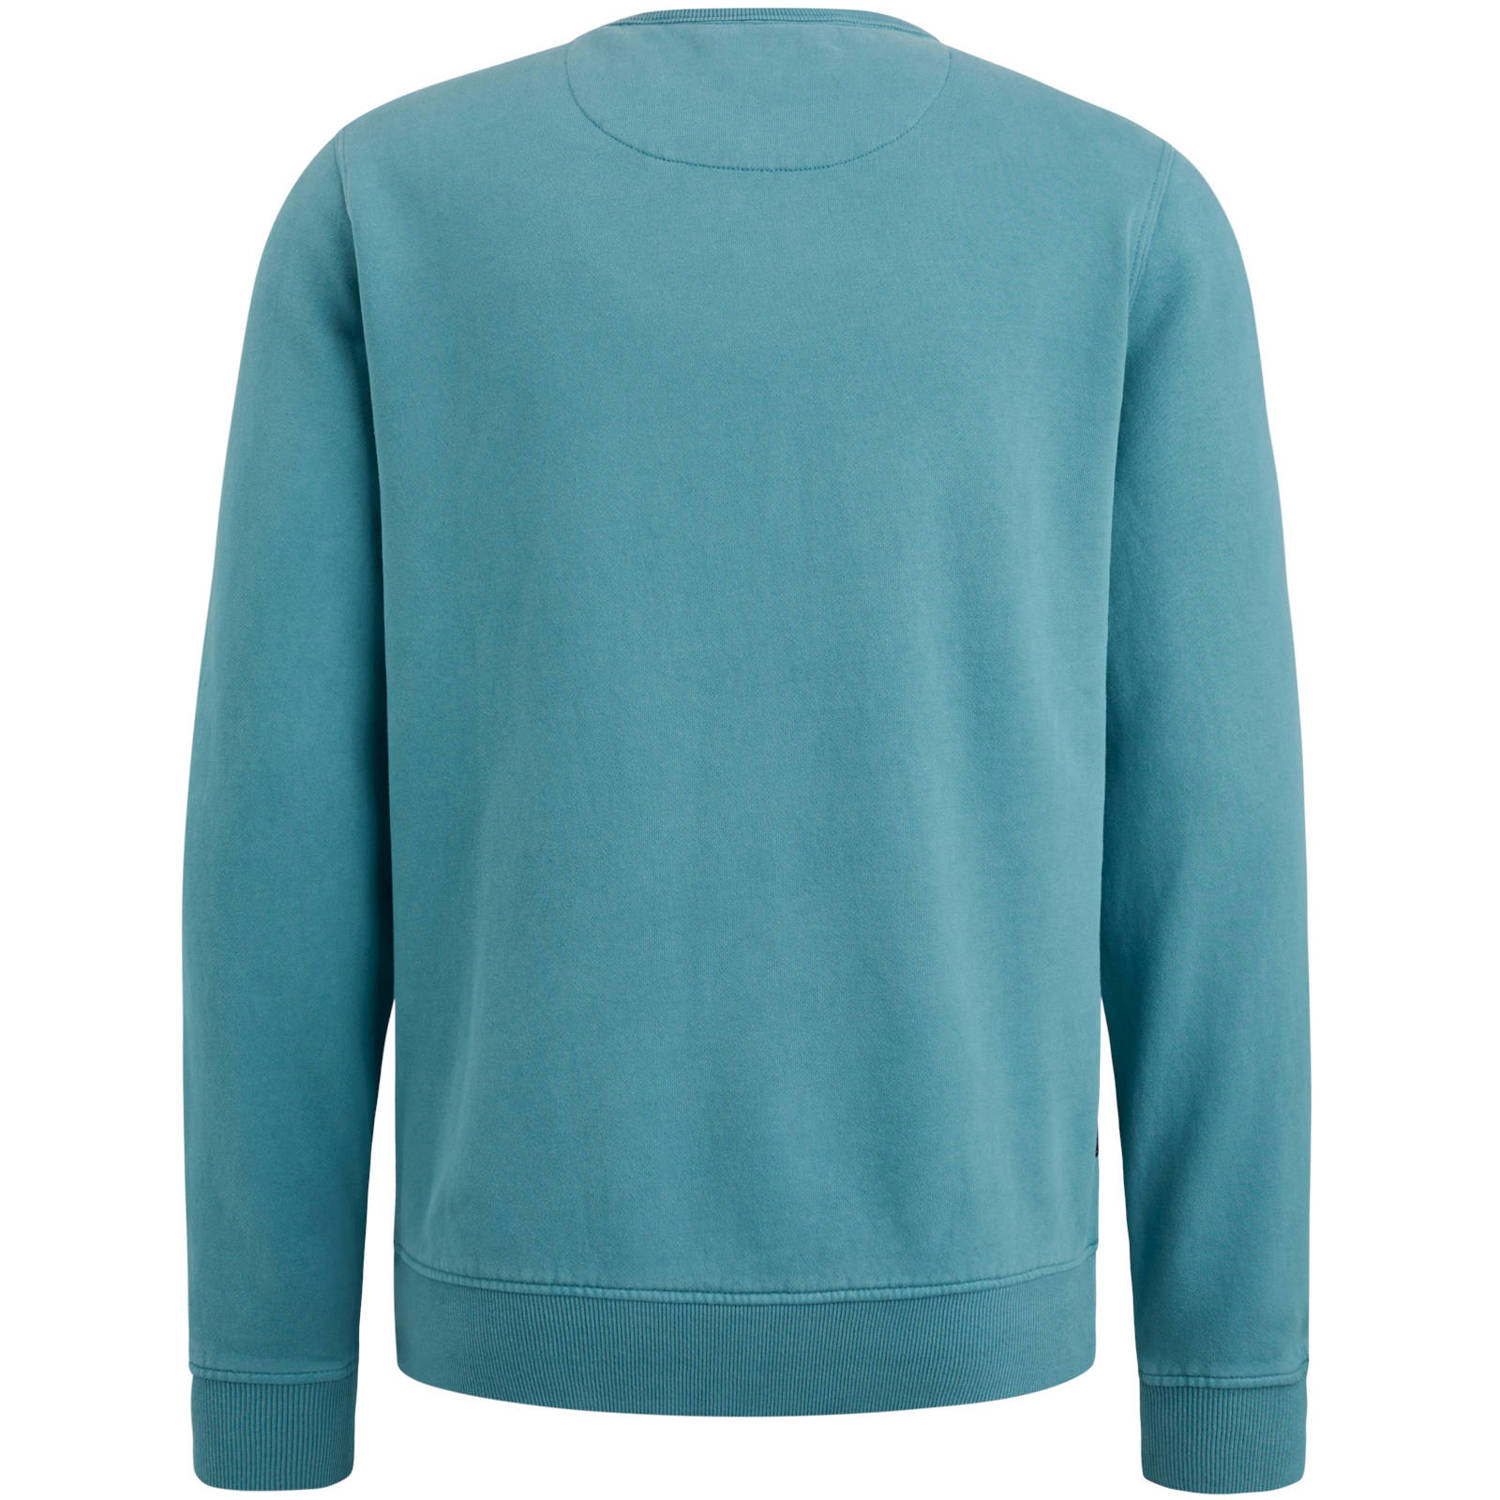 PME Legend sweater met printopdruk blauw